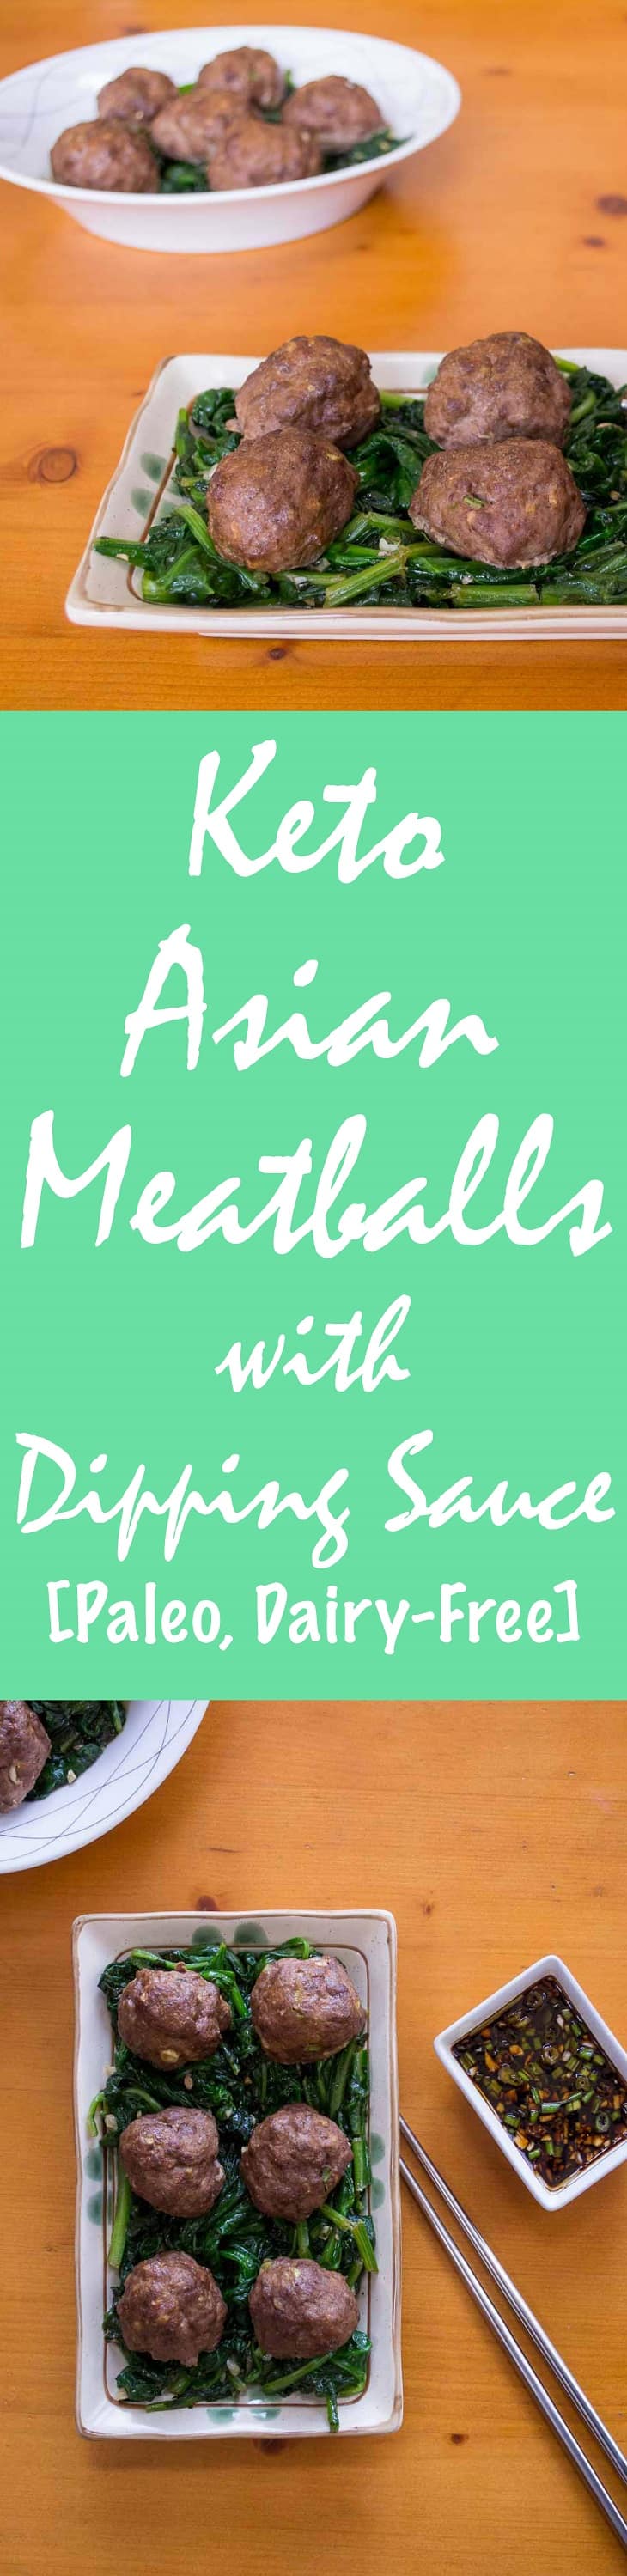 Keto Asian Meatballs Recipe with Dipping Sauce [Paleo, Dairy-Free] #paleo #recipe https://ketosummit.com/keto-asian-meatballs-recipe